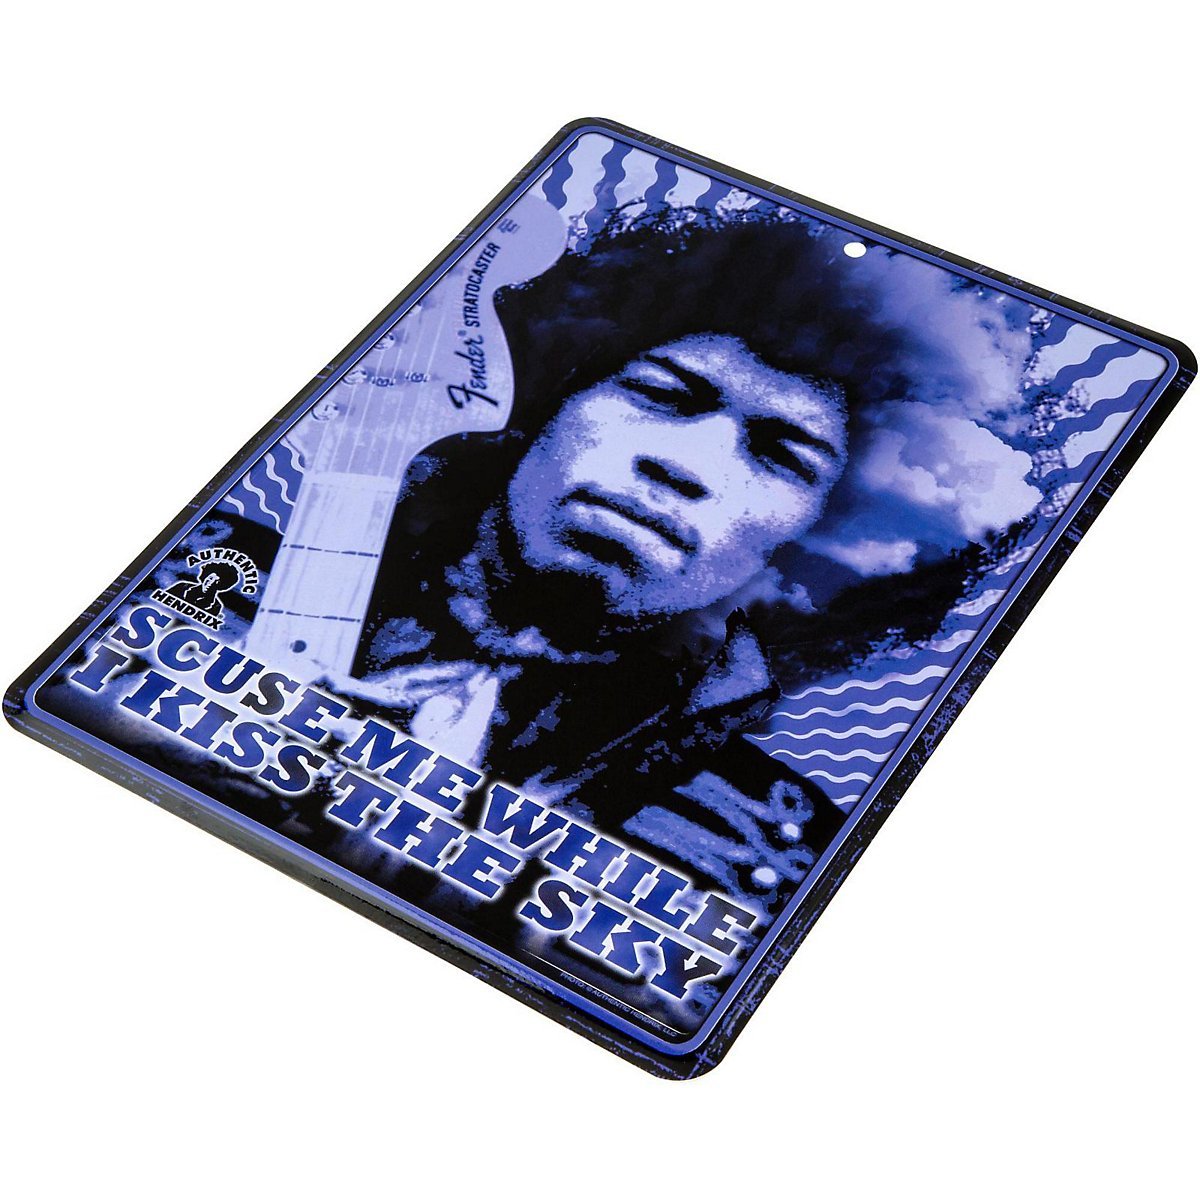 Fender Tin Sign Jimi Hendrix Kiss The Sky - Placa con publicidad - Variation 1